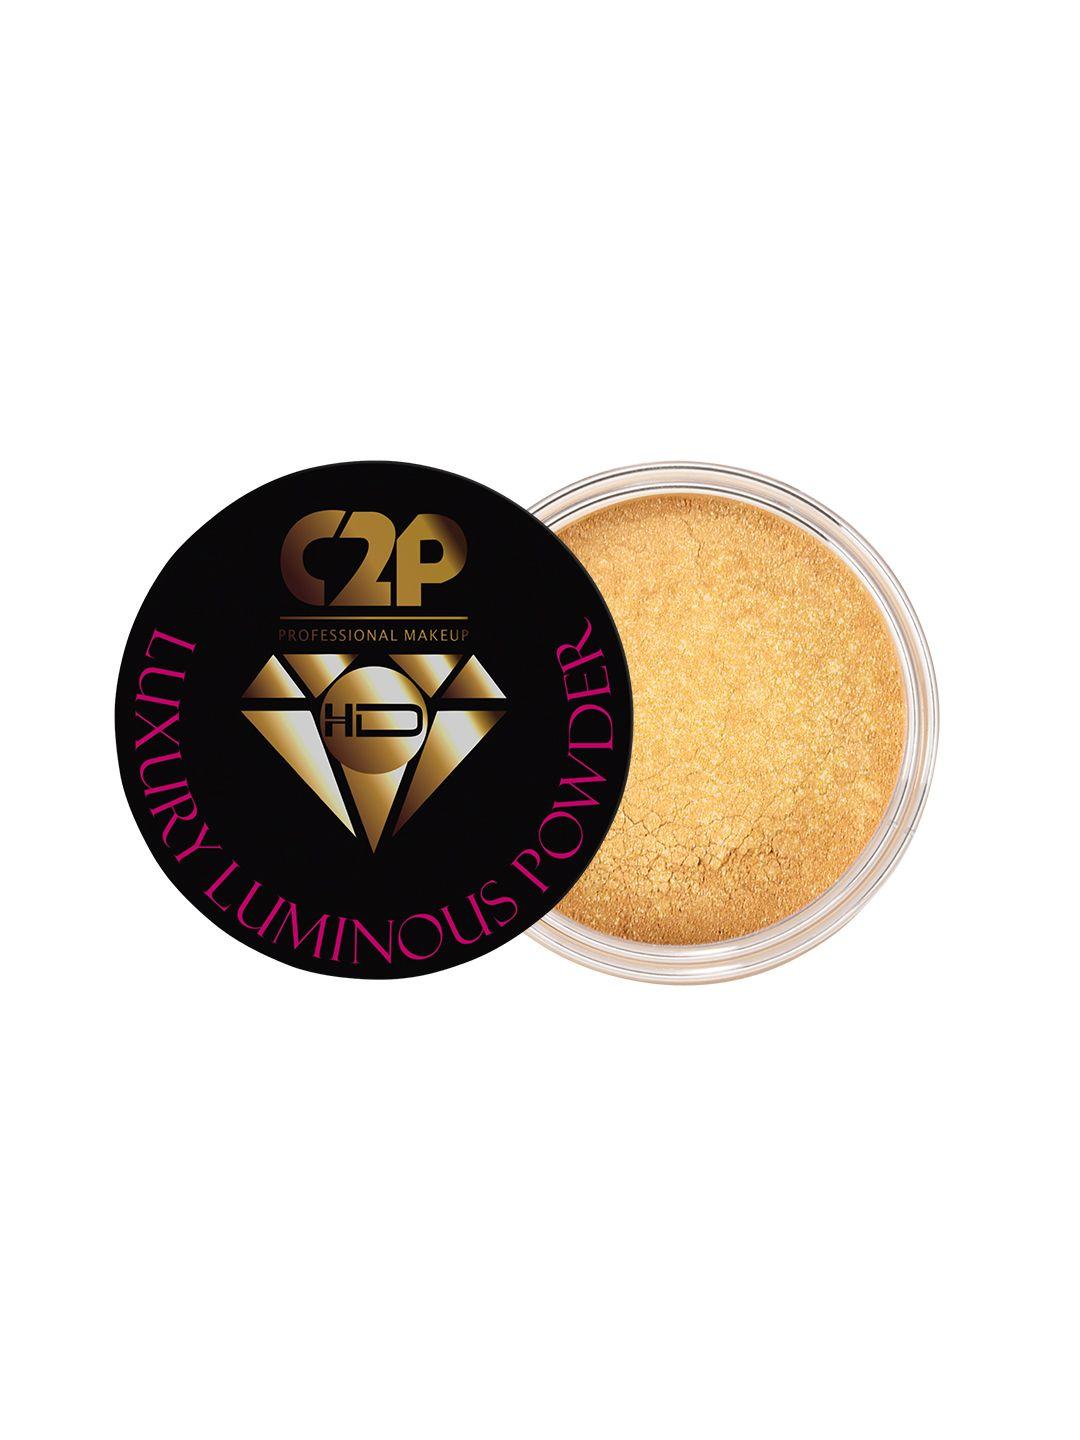 c2p professional makeup hd luxury luminous shimmer powder - mood nude 02